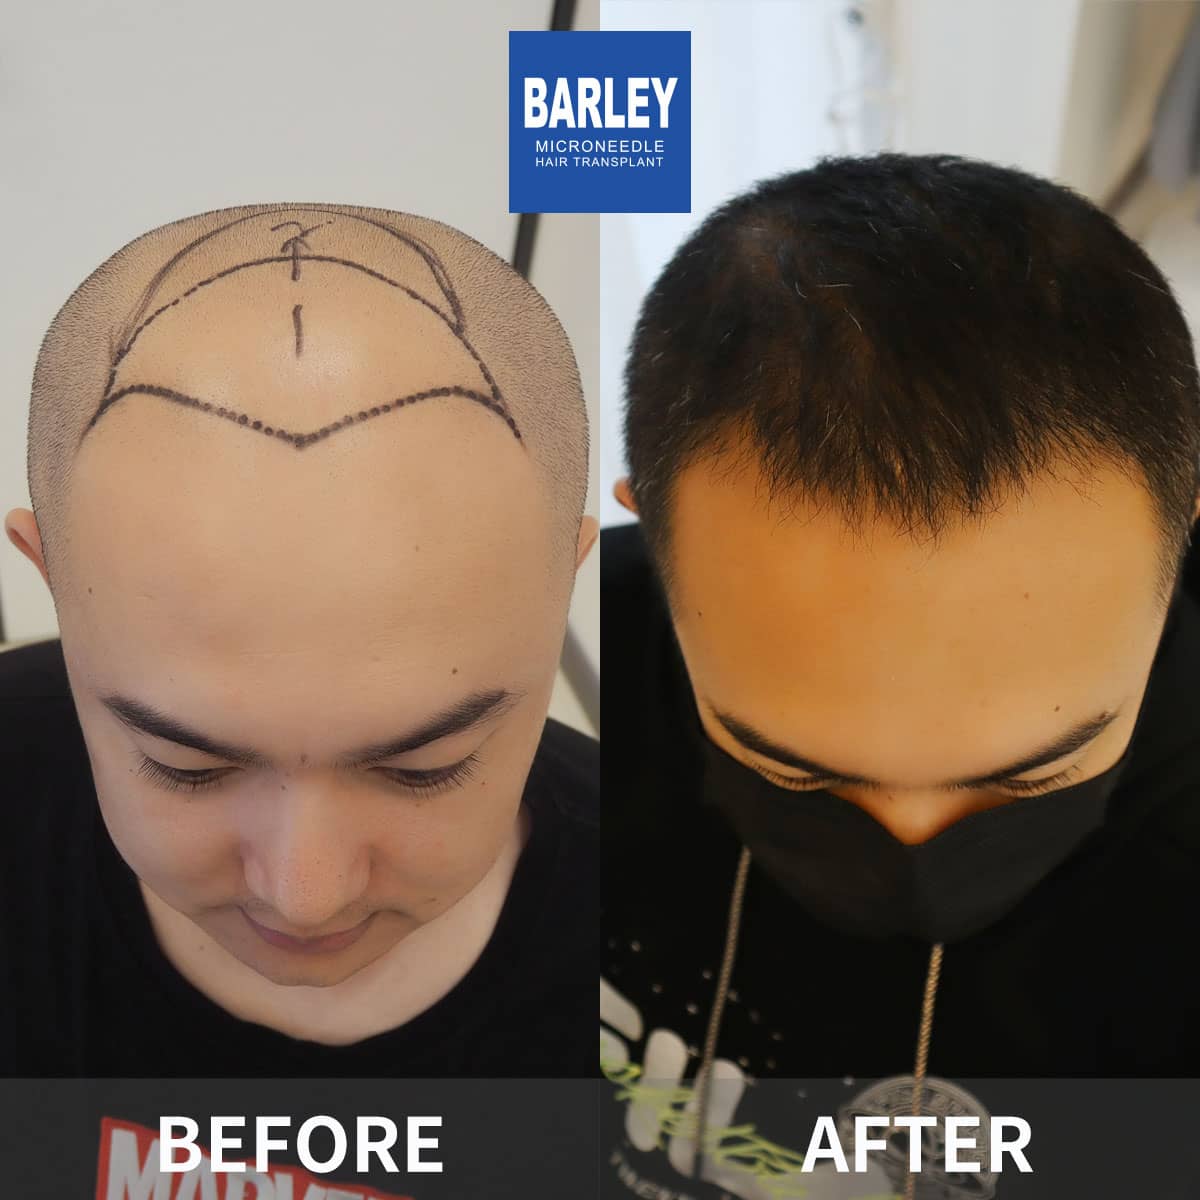 Barley hair transplant results